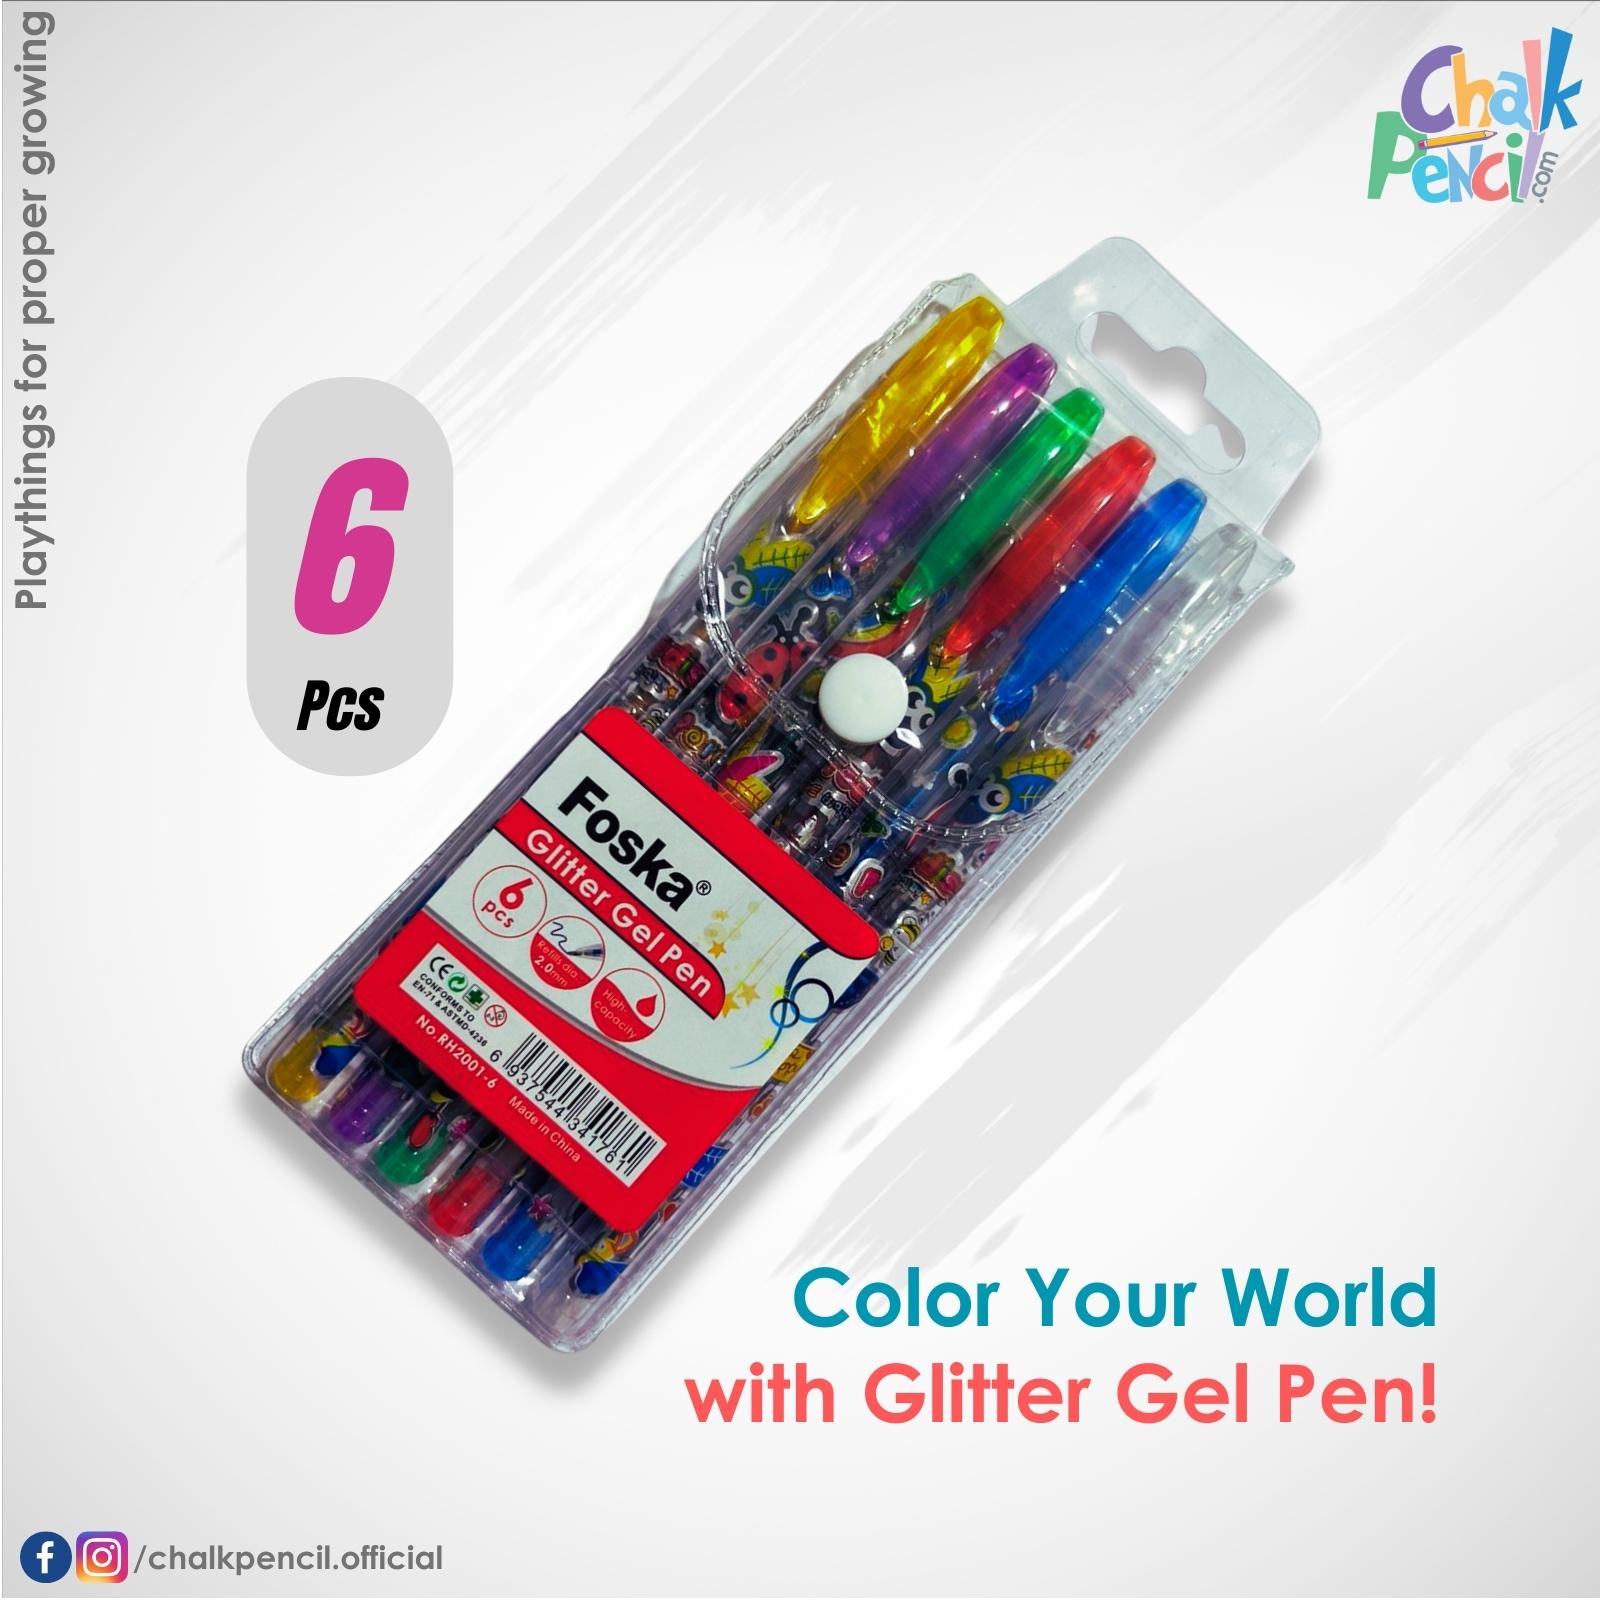 Foska Glitter Gel Pen